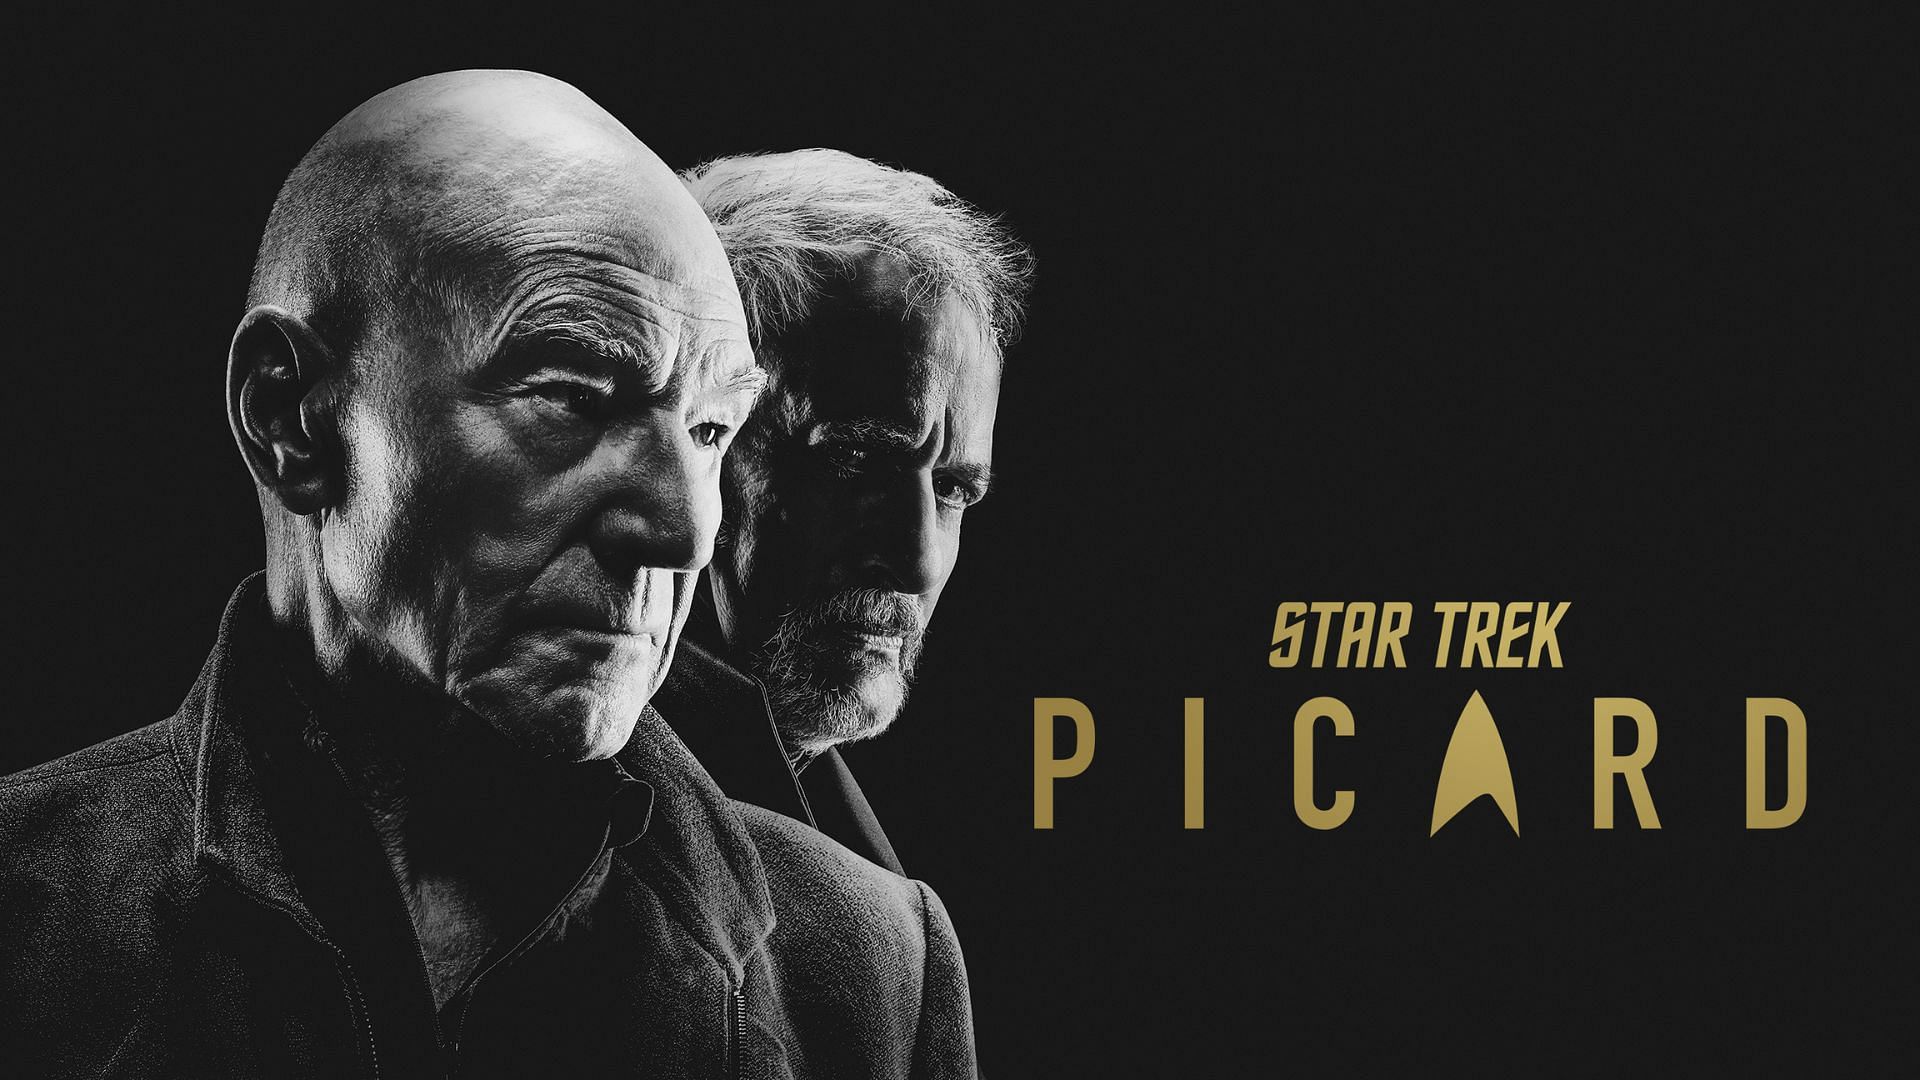 Star Trek: Picard promotional poster (Image via Amazon)